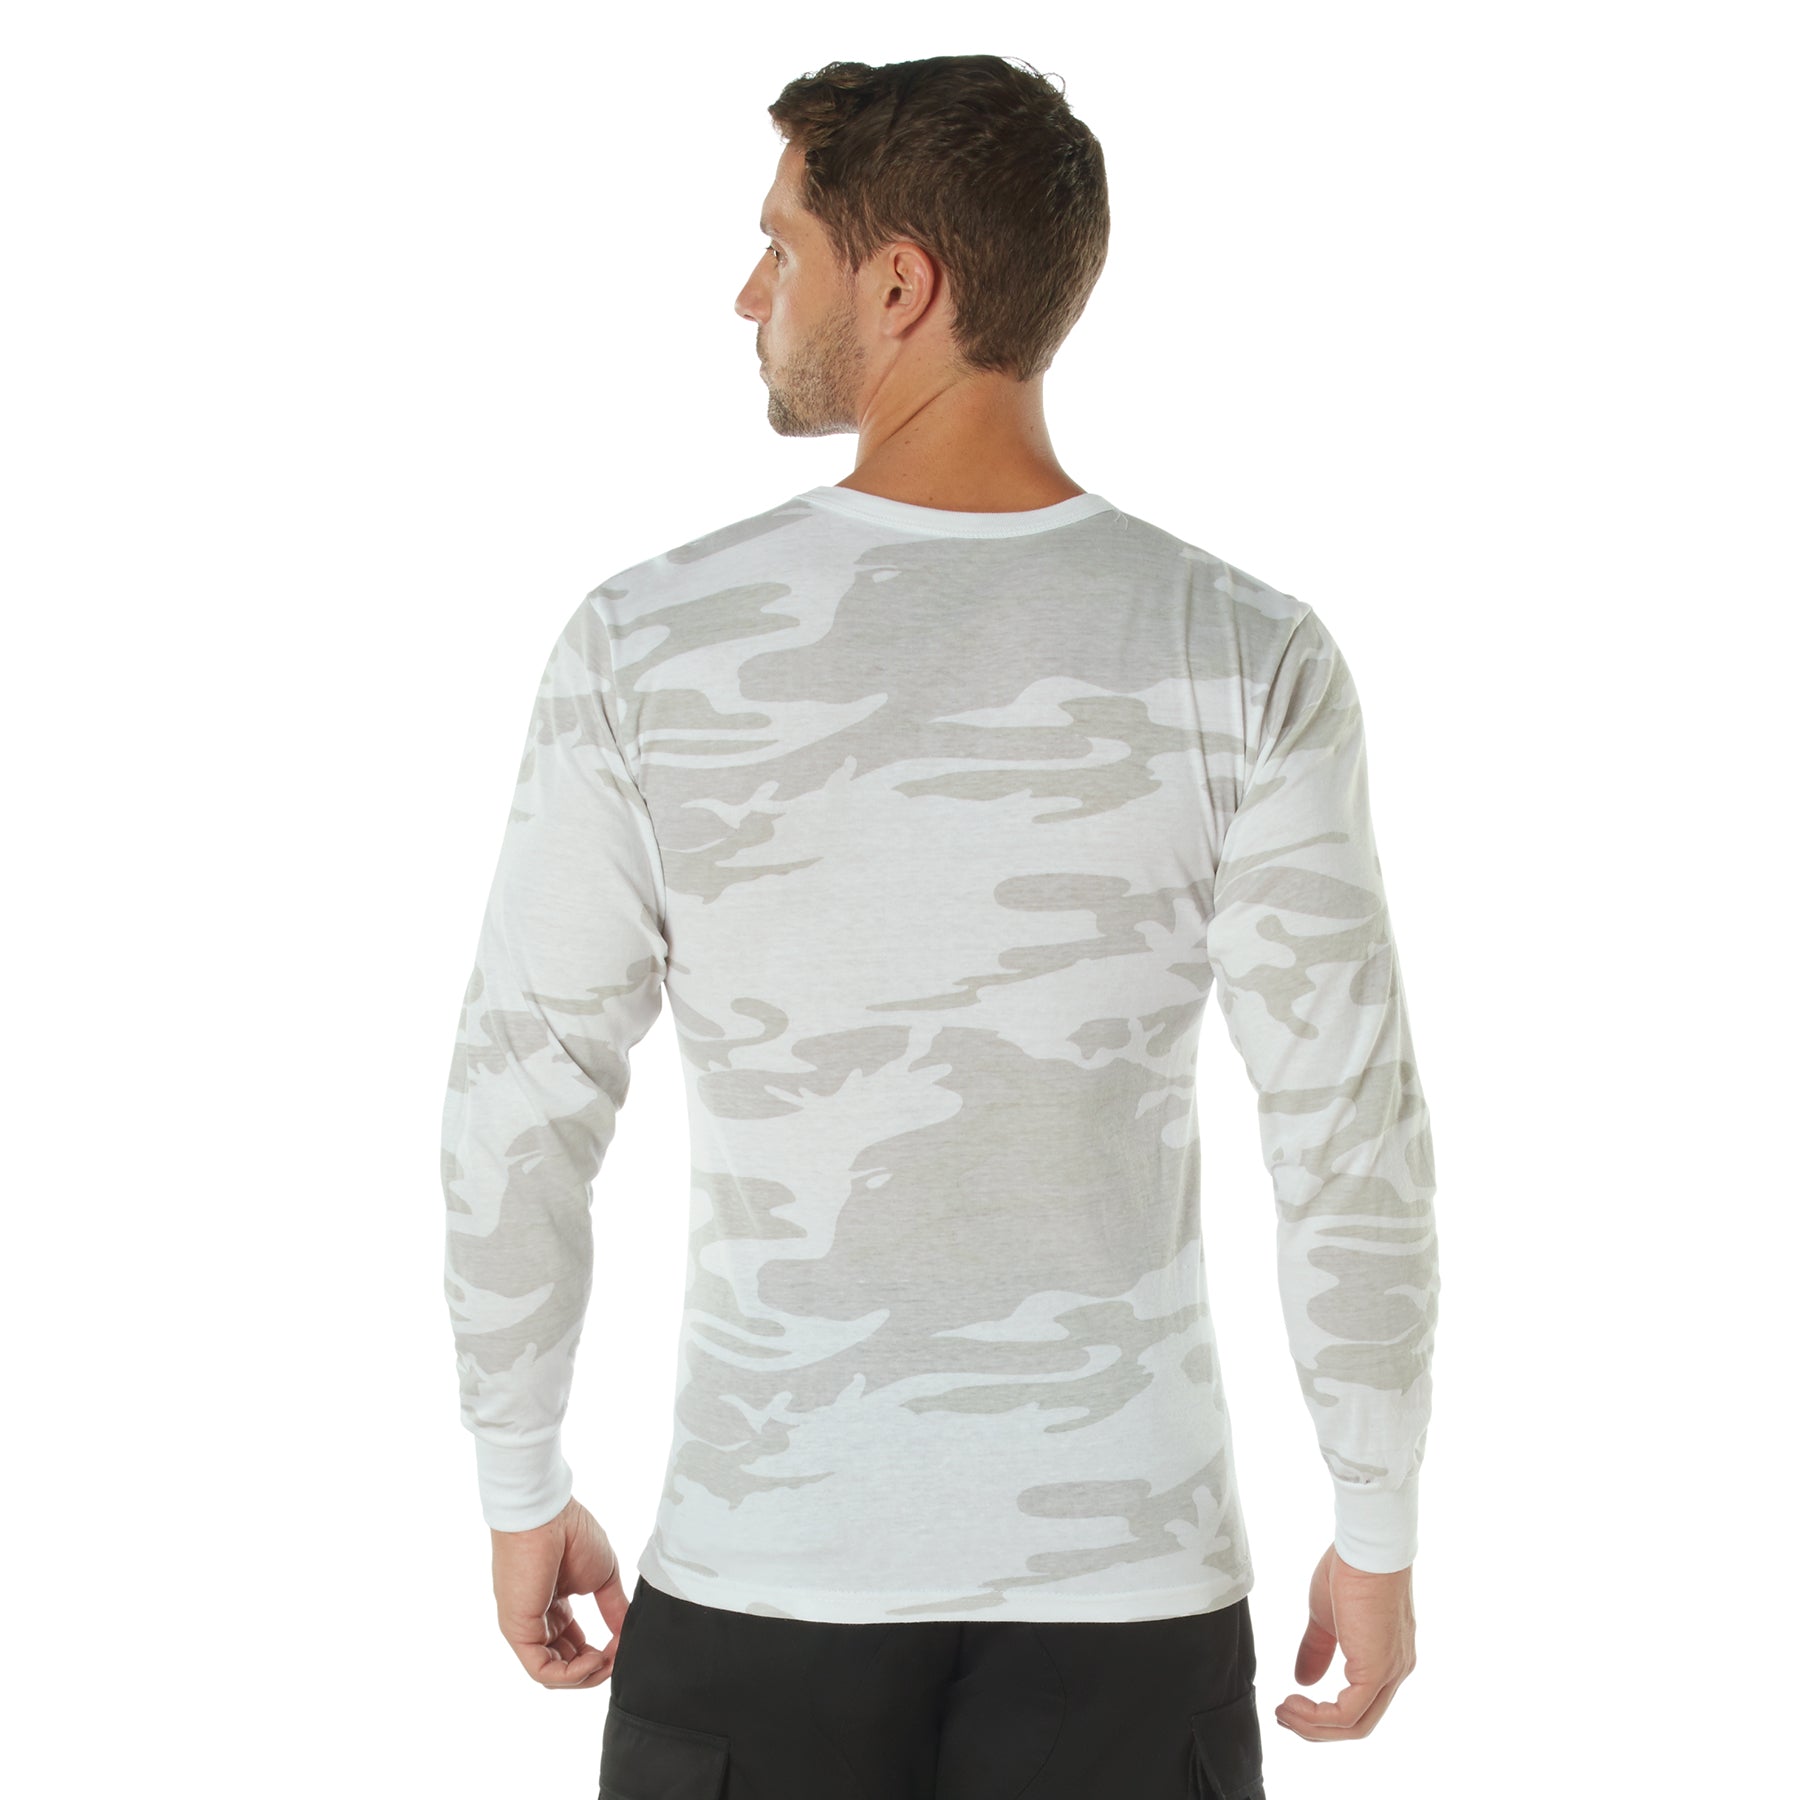 Camo Poly/Cotton Long Sleeve Shirts